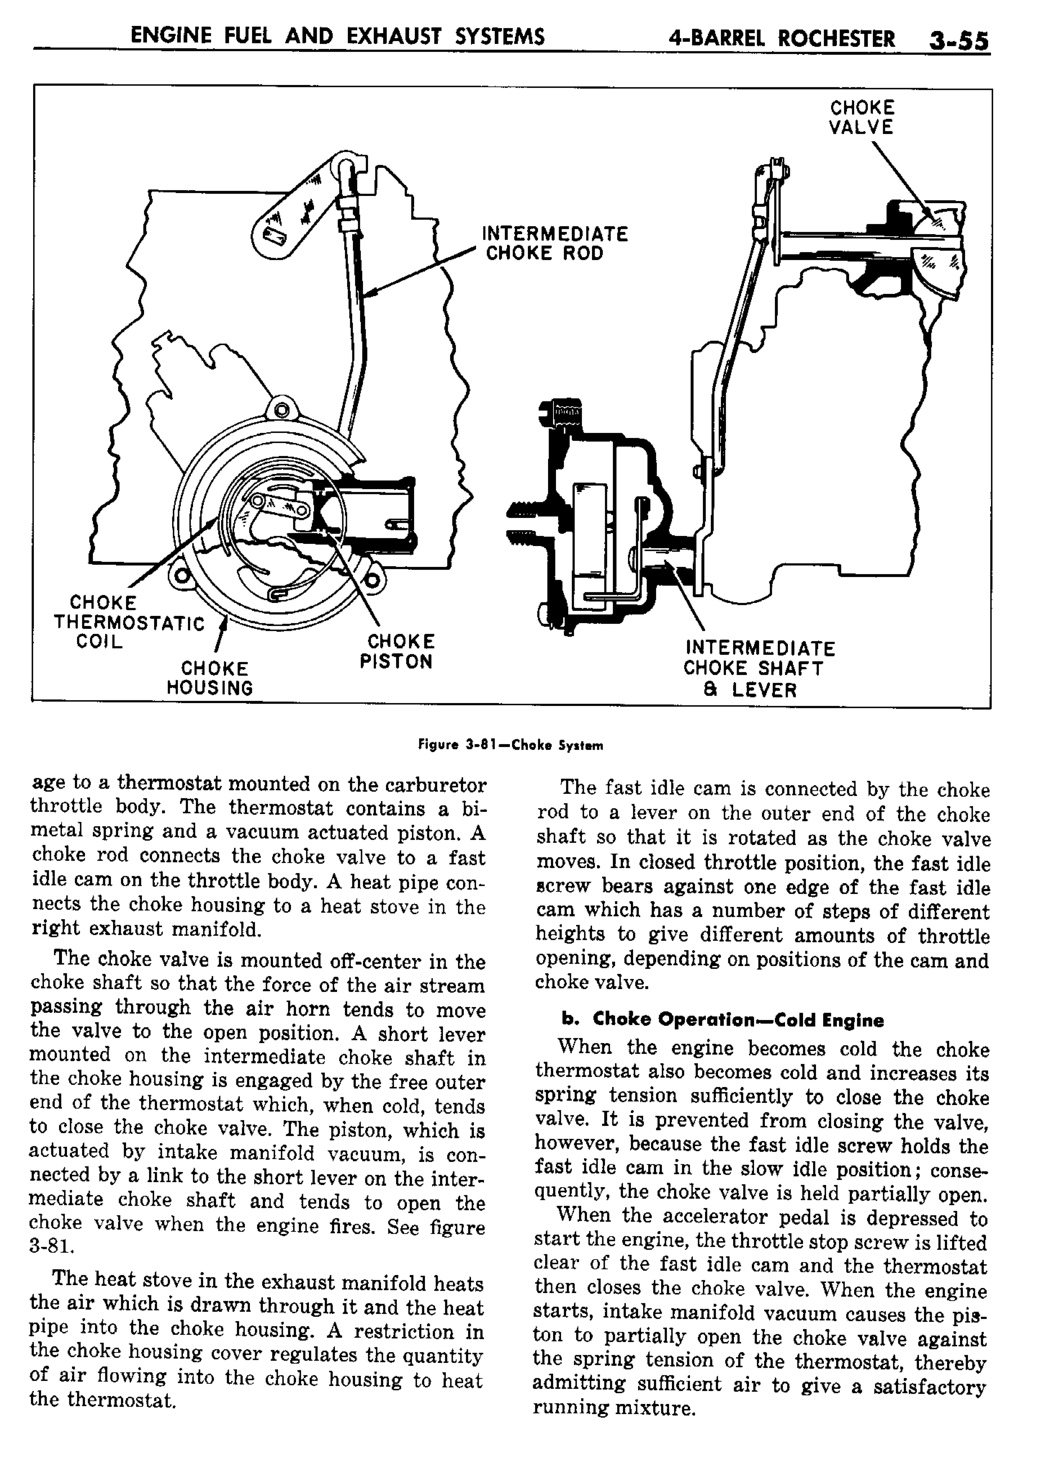 n_04 1960 Buick Shop Manual - Engine Fuel & Exhaust-055-055.jpg